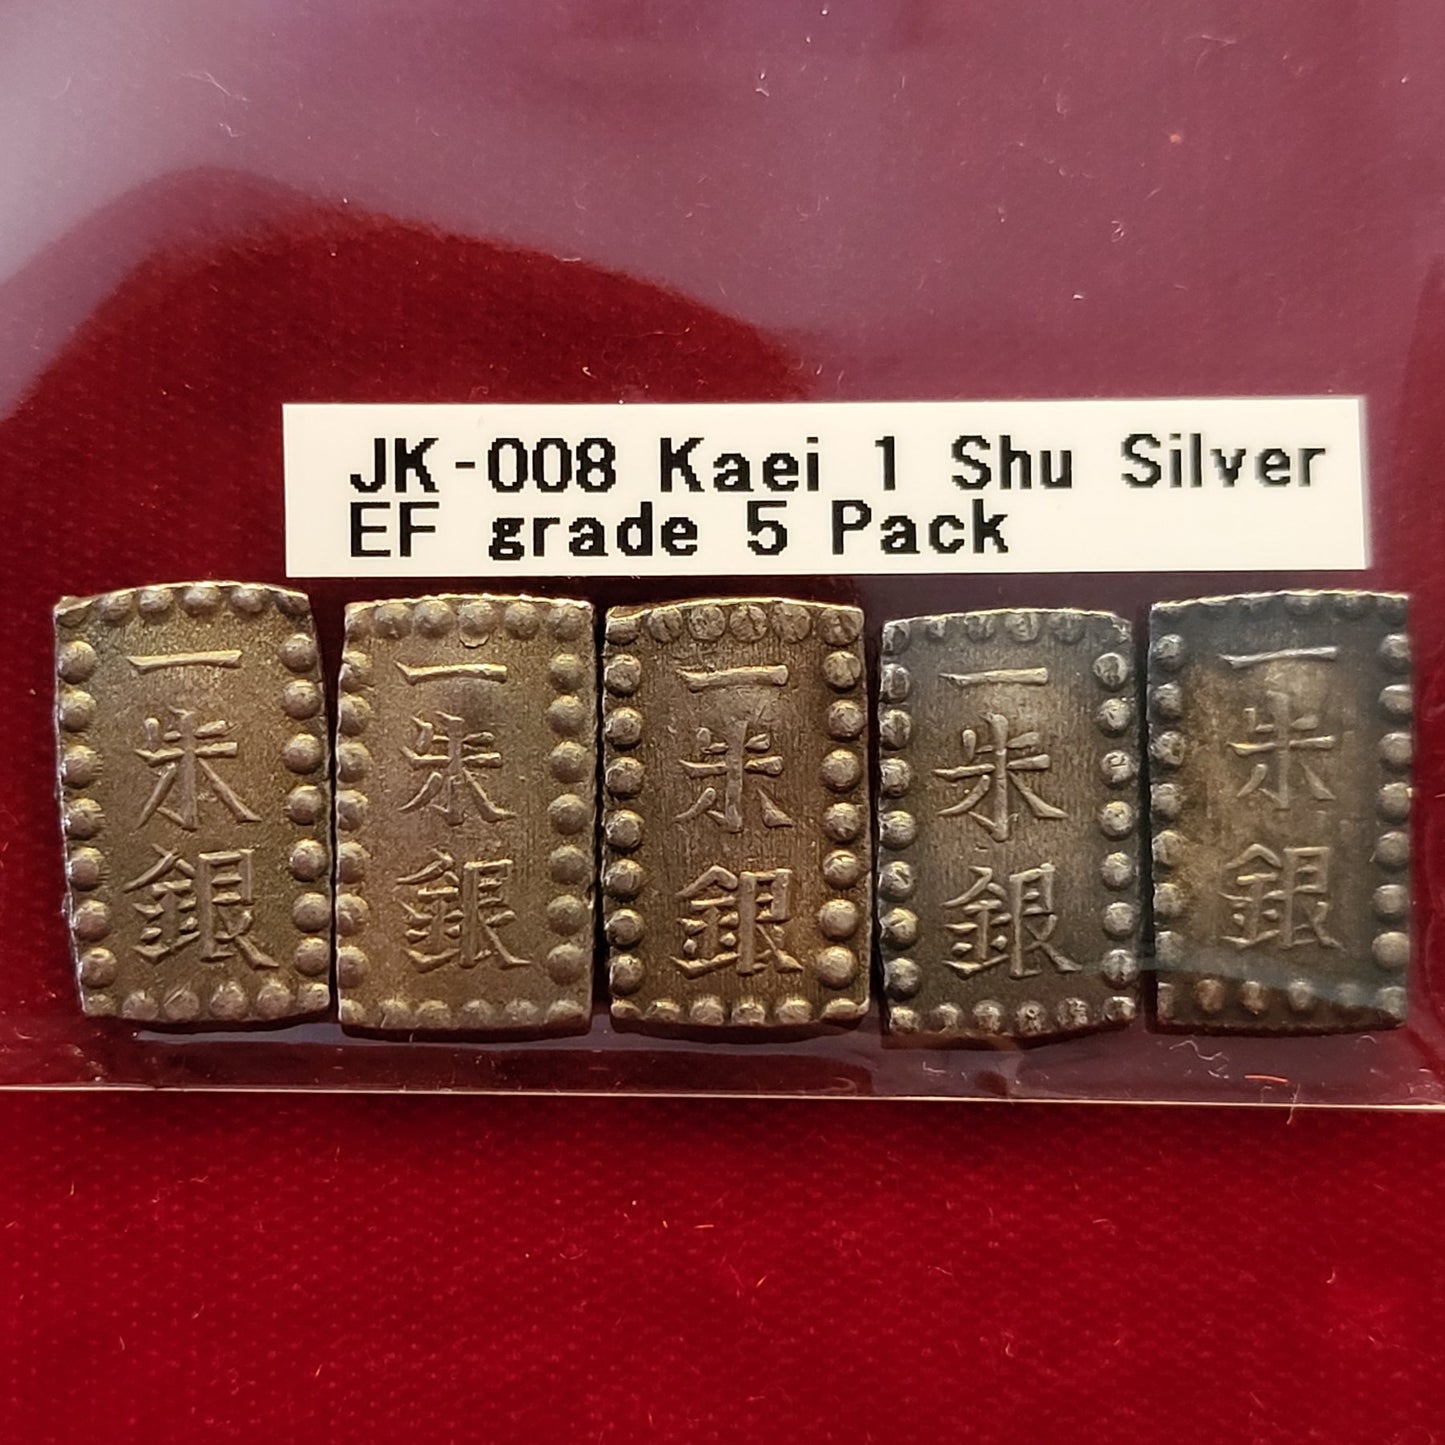 Kaei 1 Shu Silver EF grade 5 Pack 